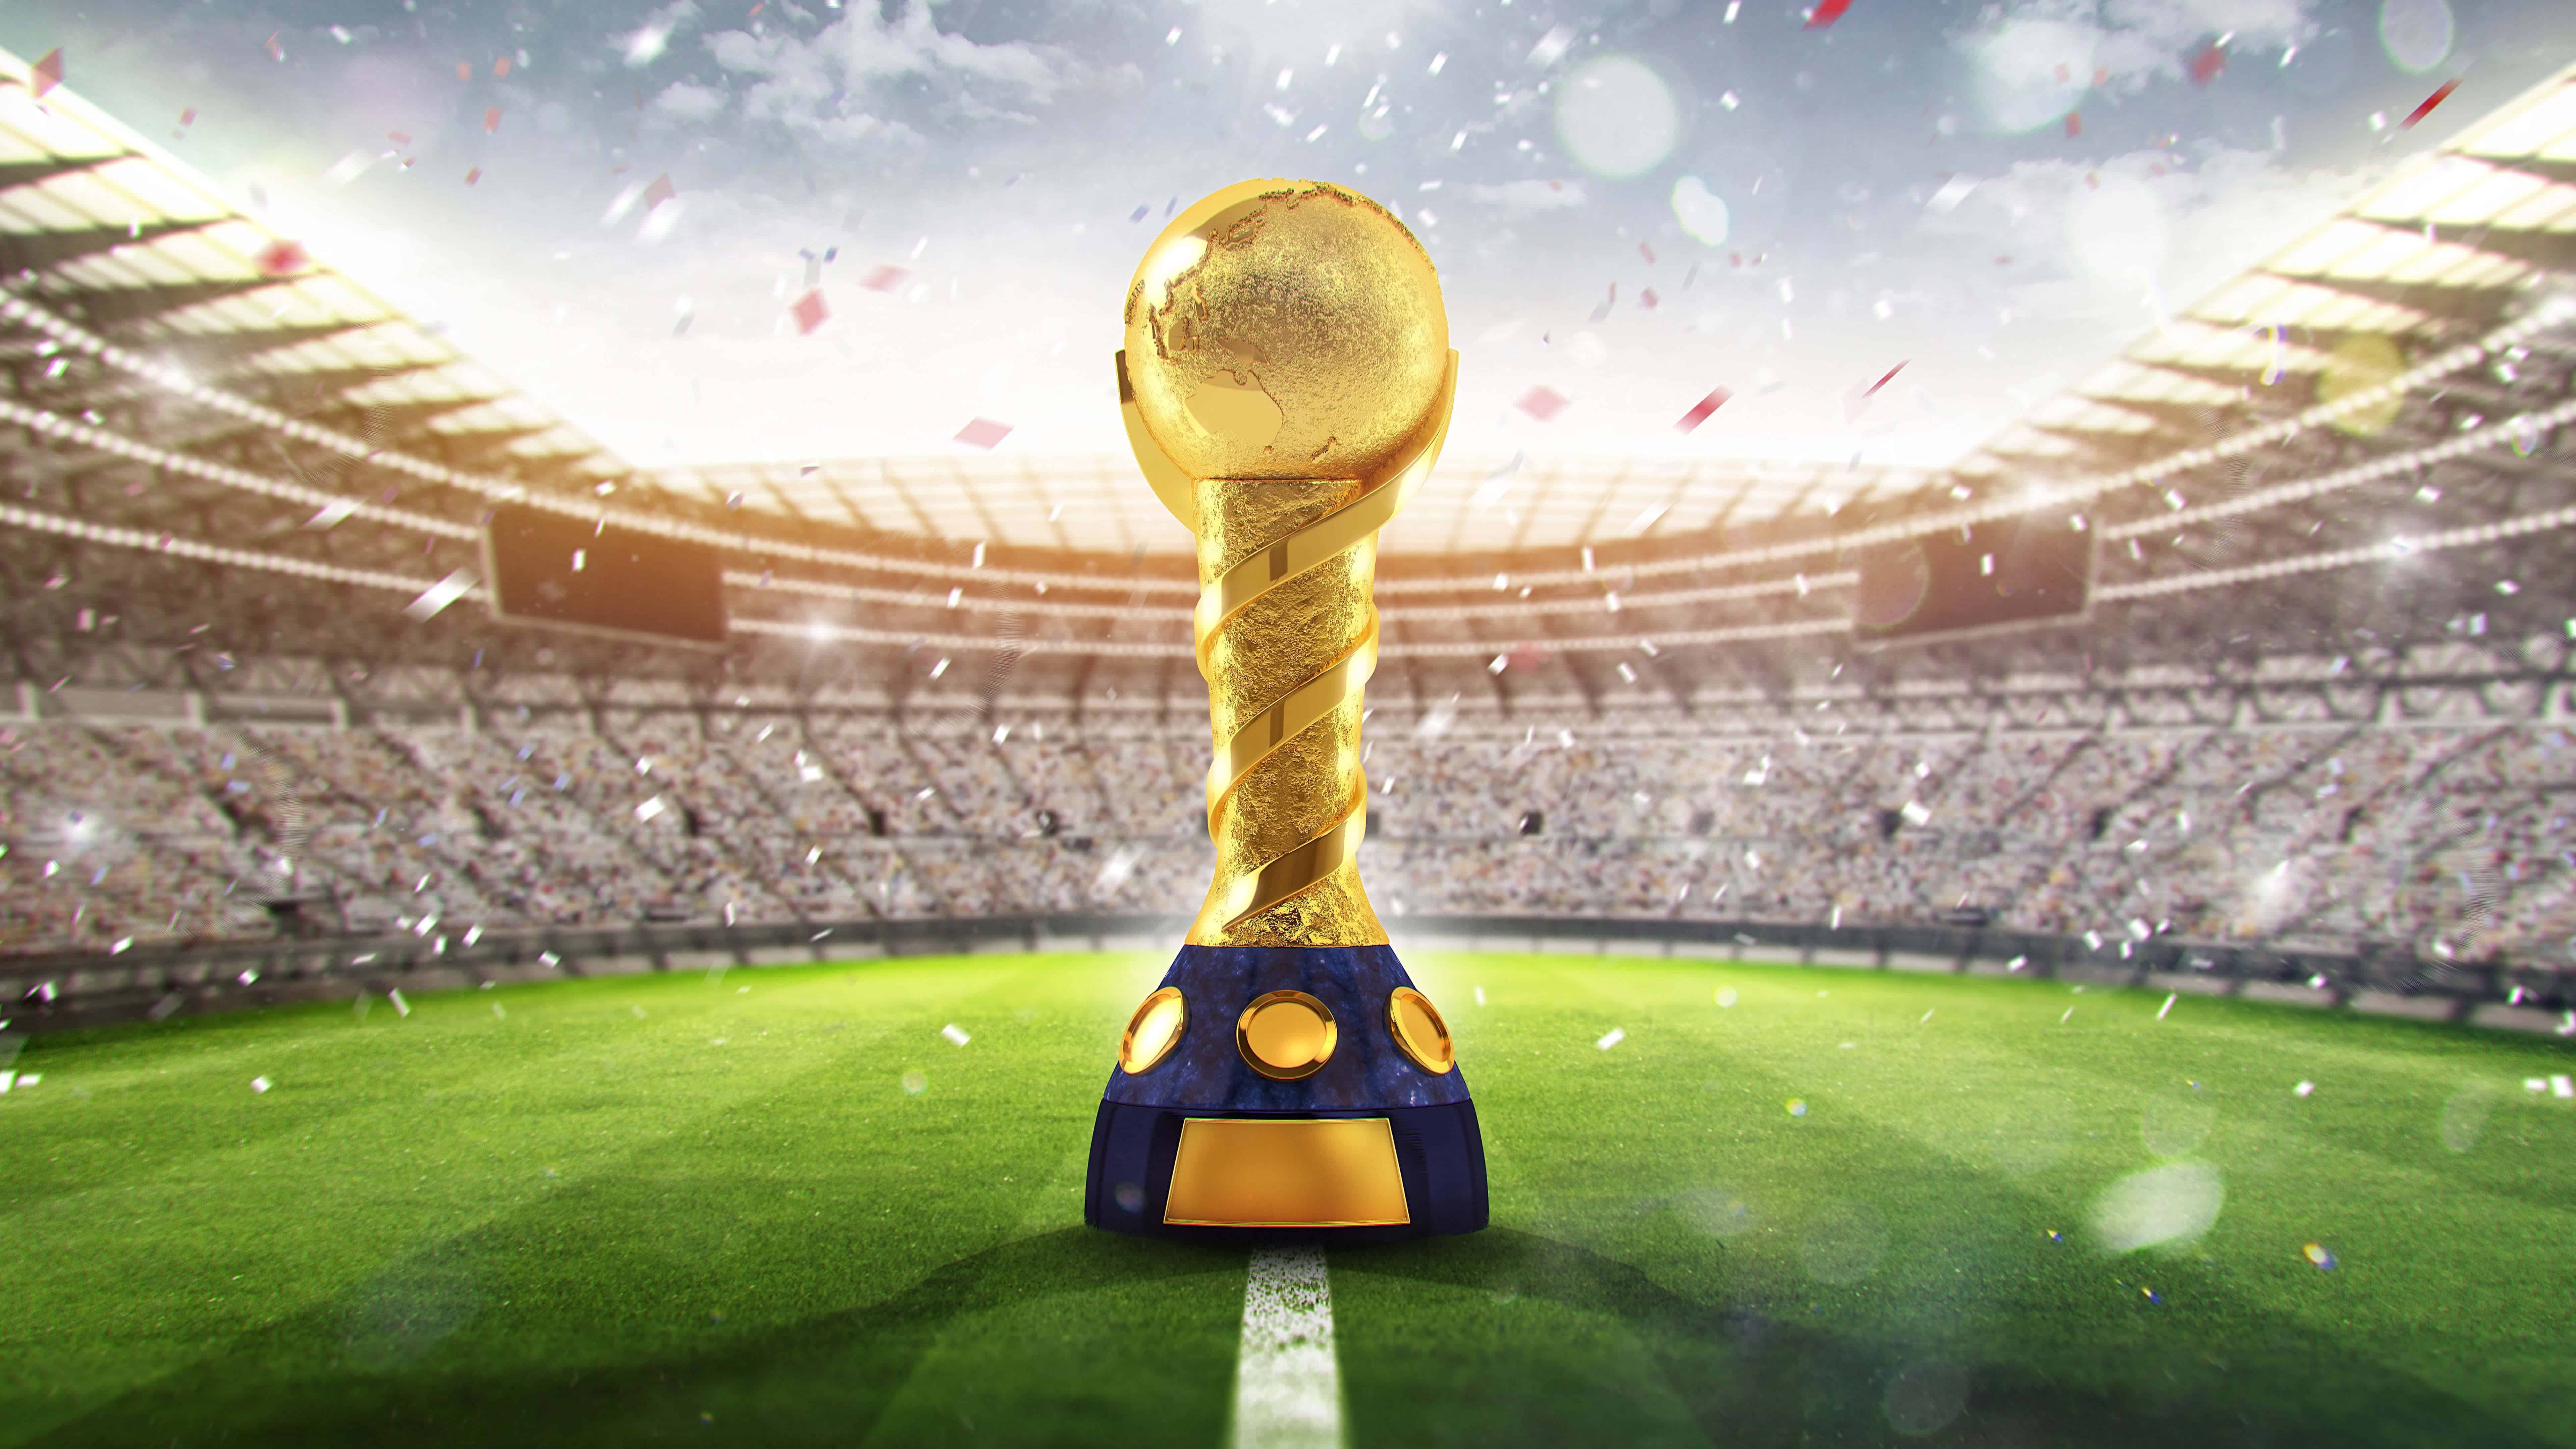 fifa-world-cup-2018-russia-golden-trophy-uhd-8k-wallpaper-pixelz